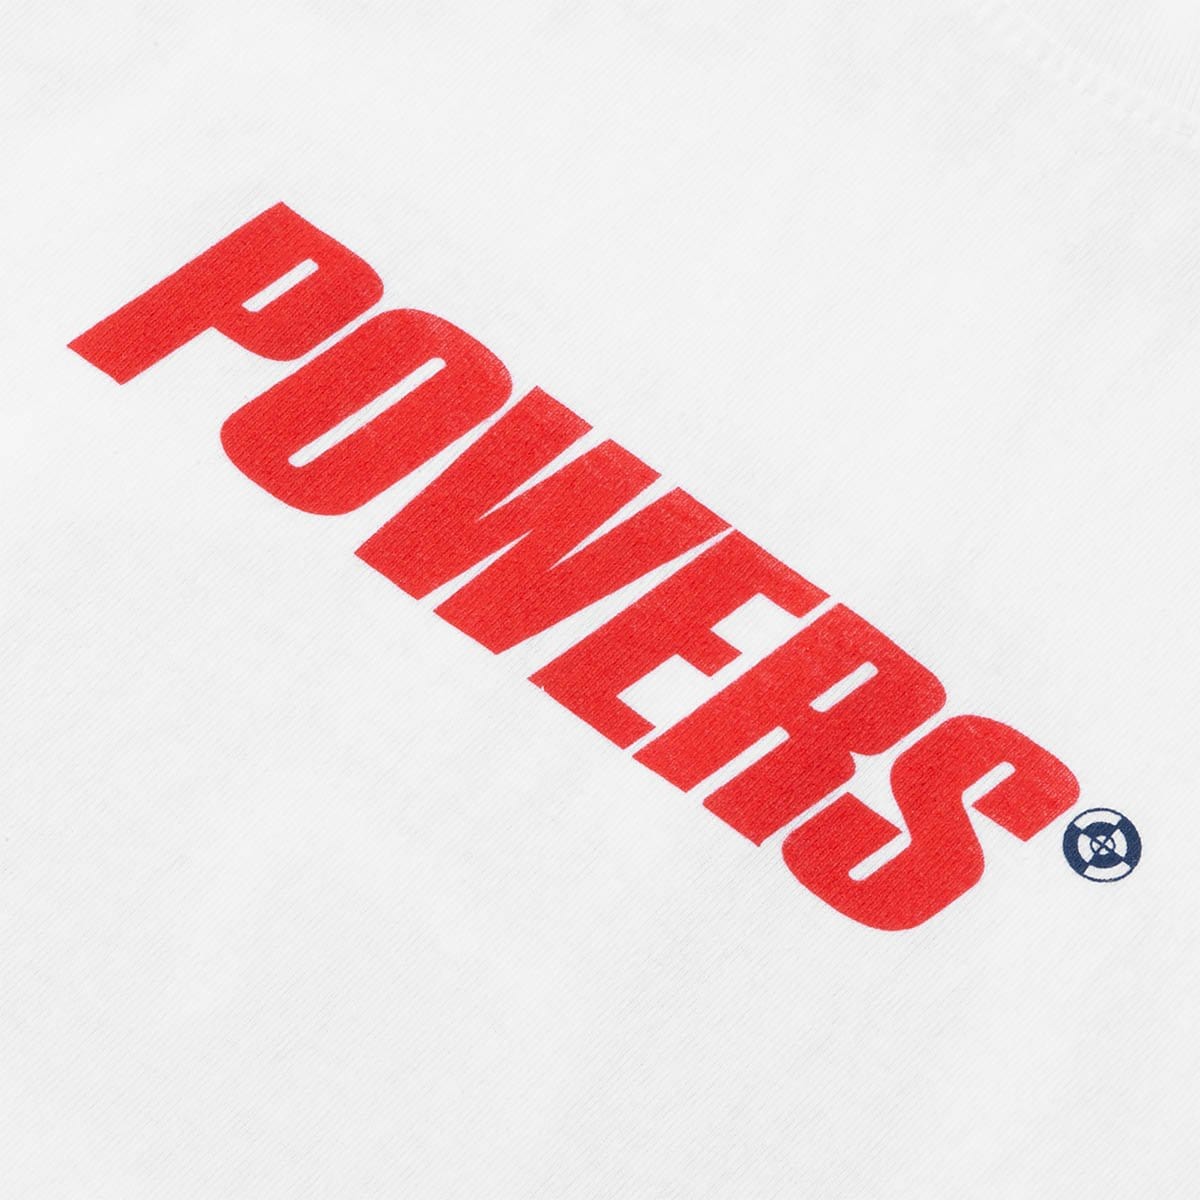 POWERS T-Shirts POWERS LOGO S/S TEE